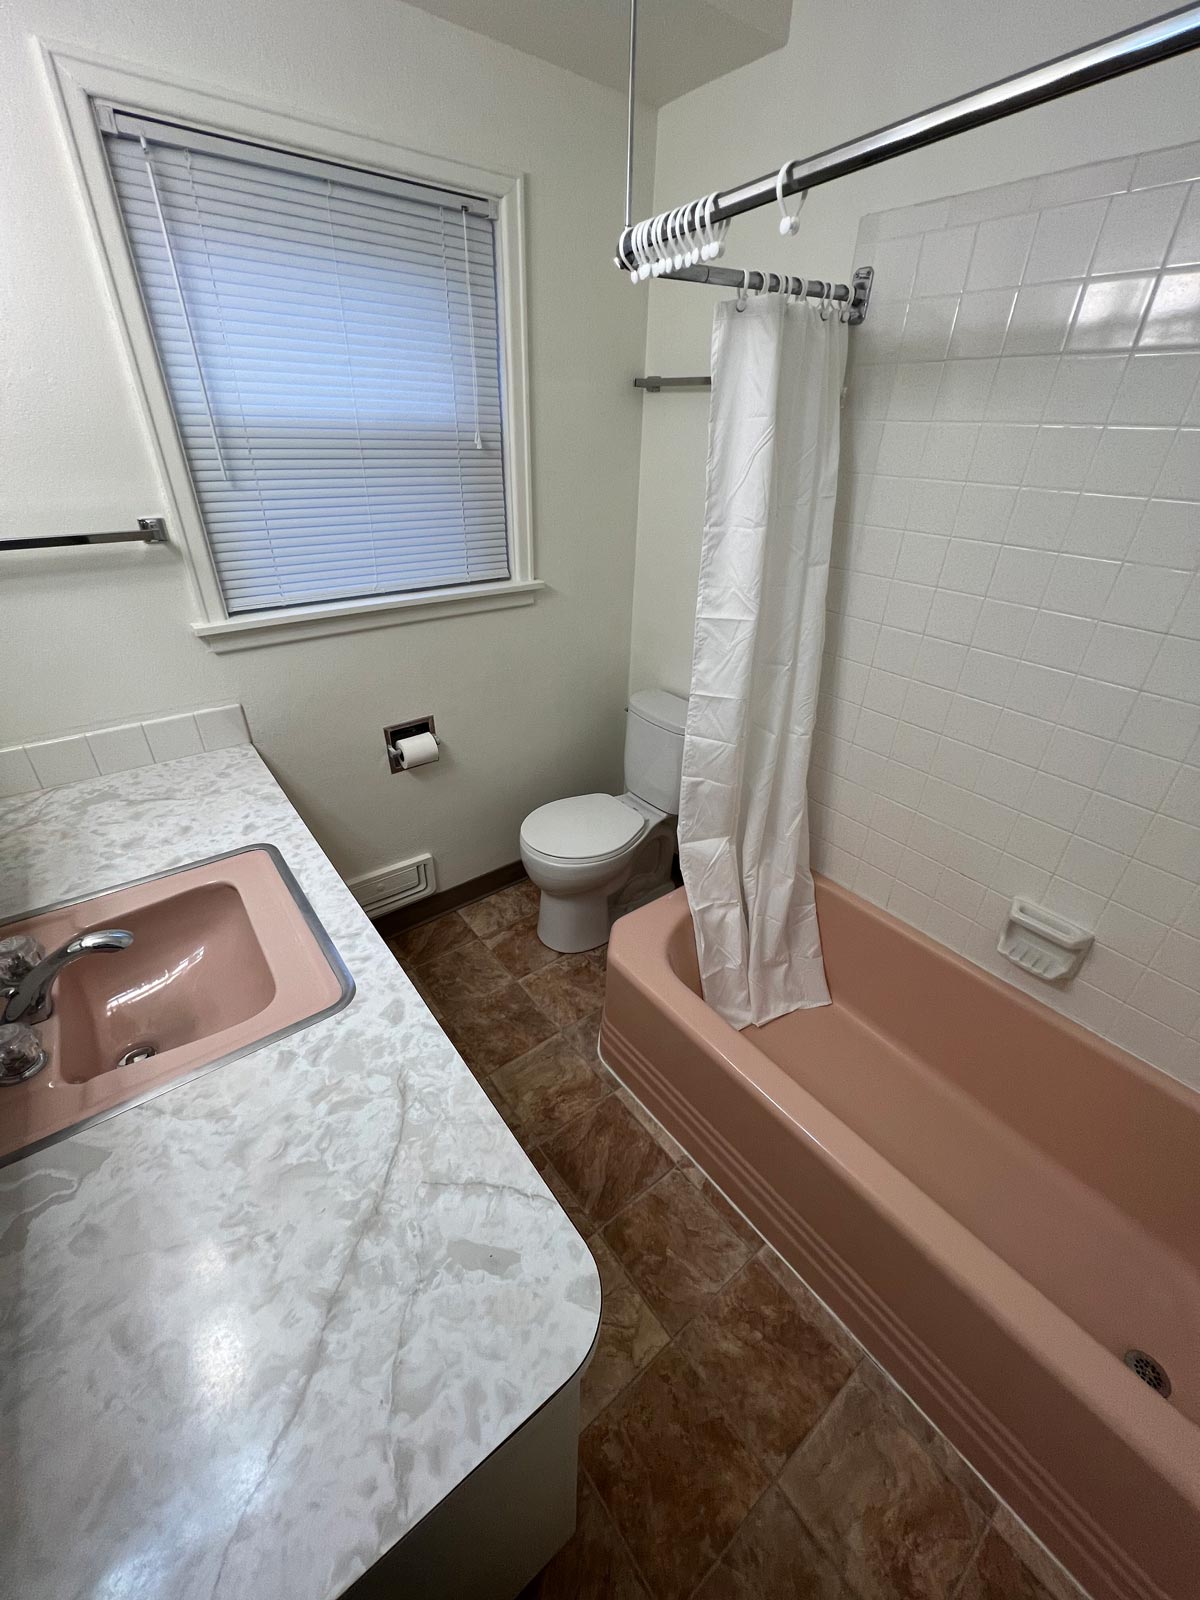 539 59th street apartment Interior - bathroom